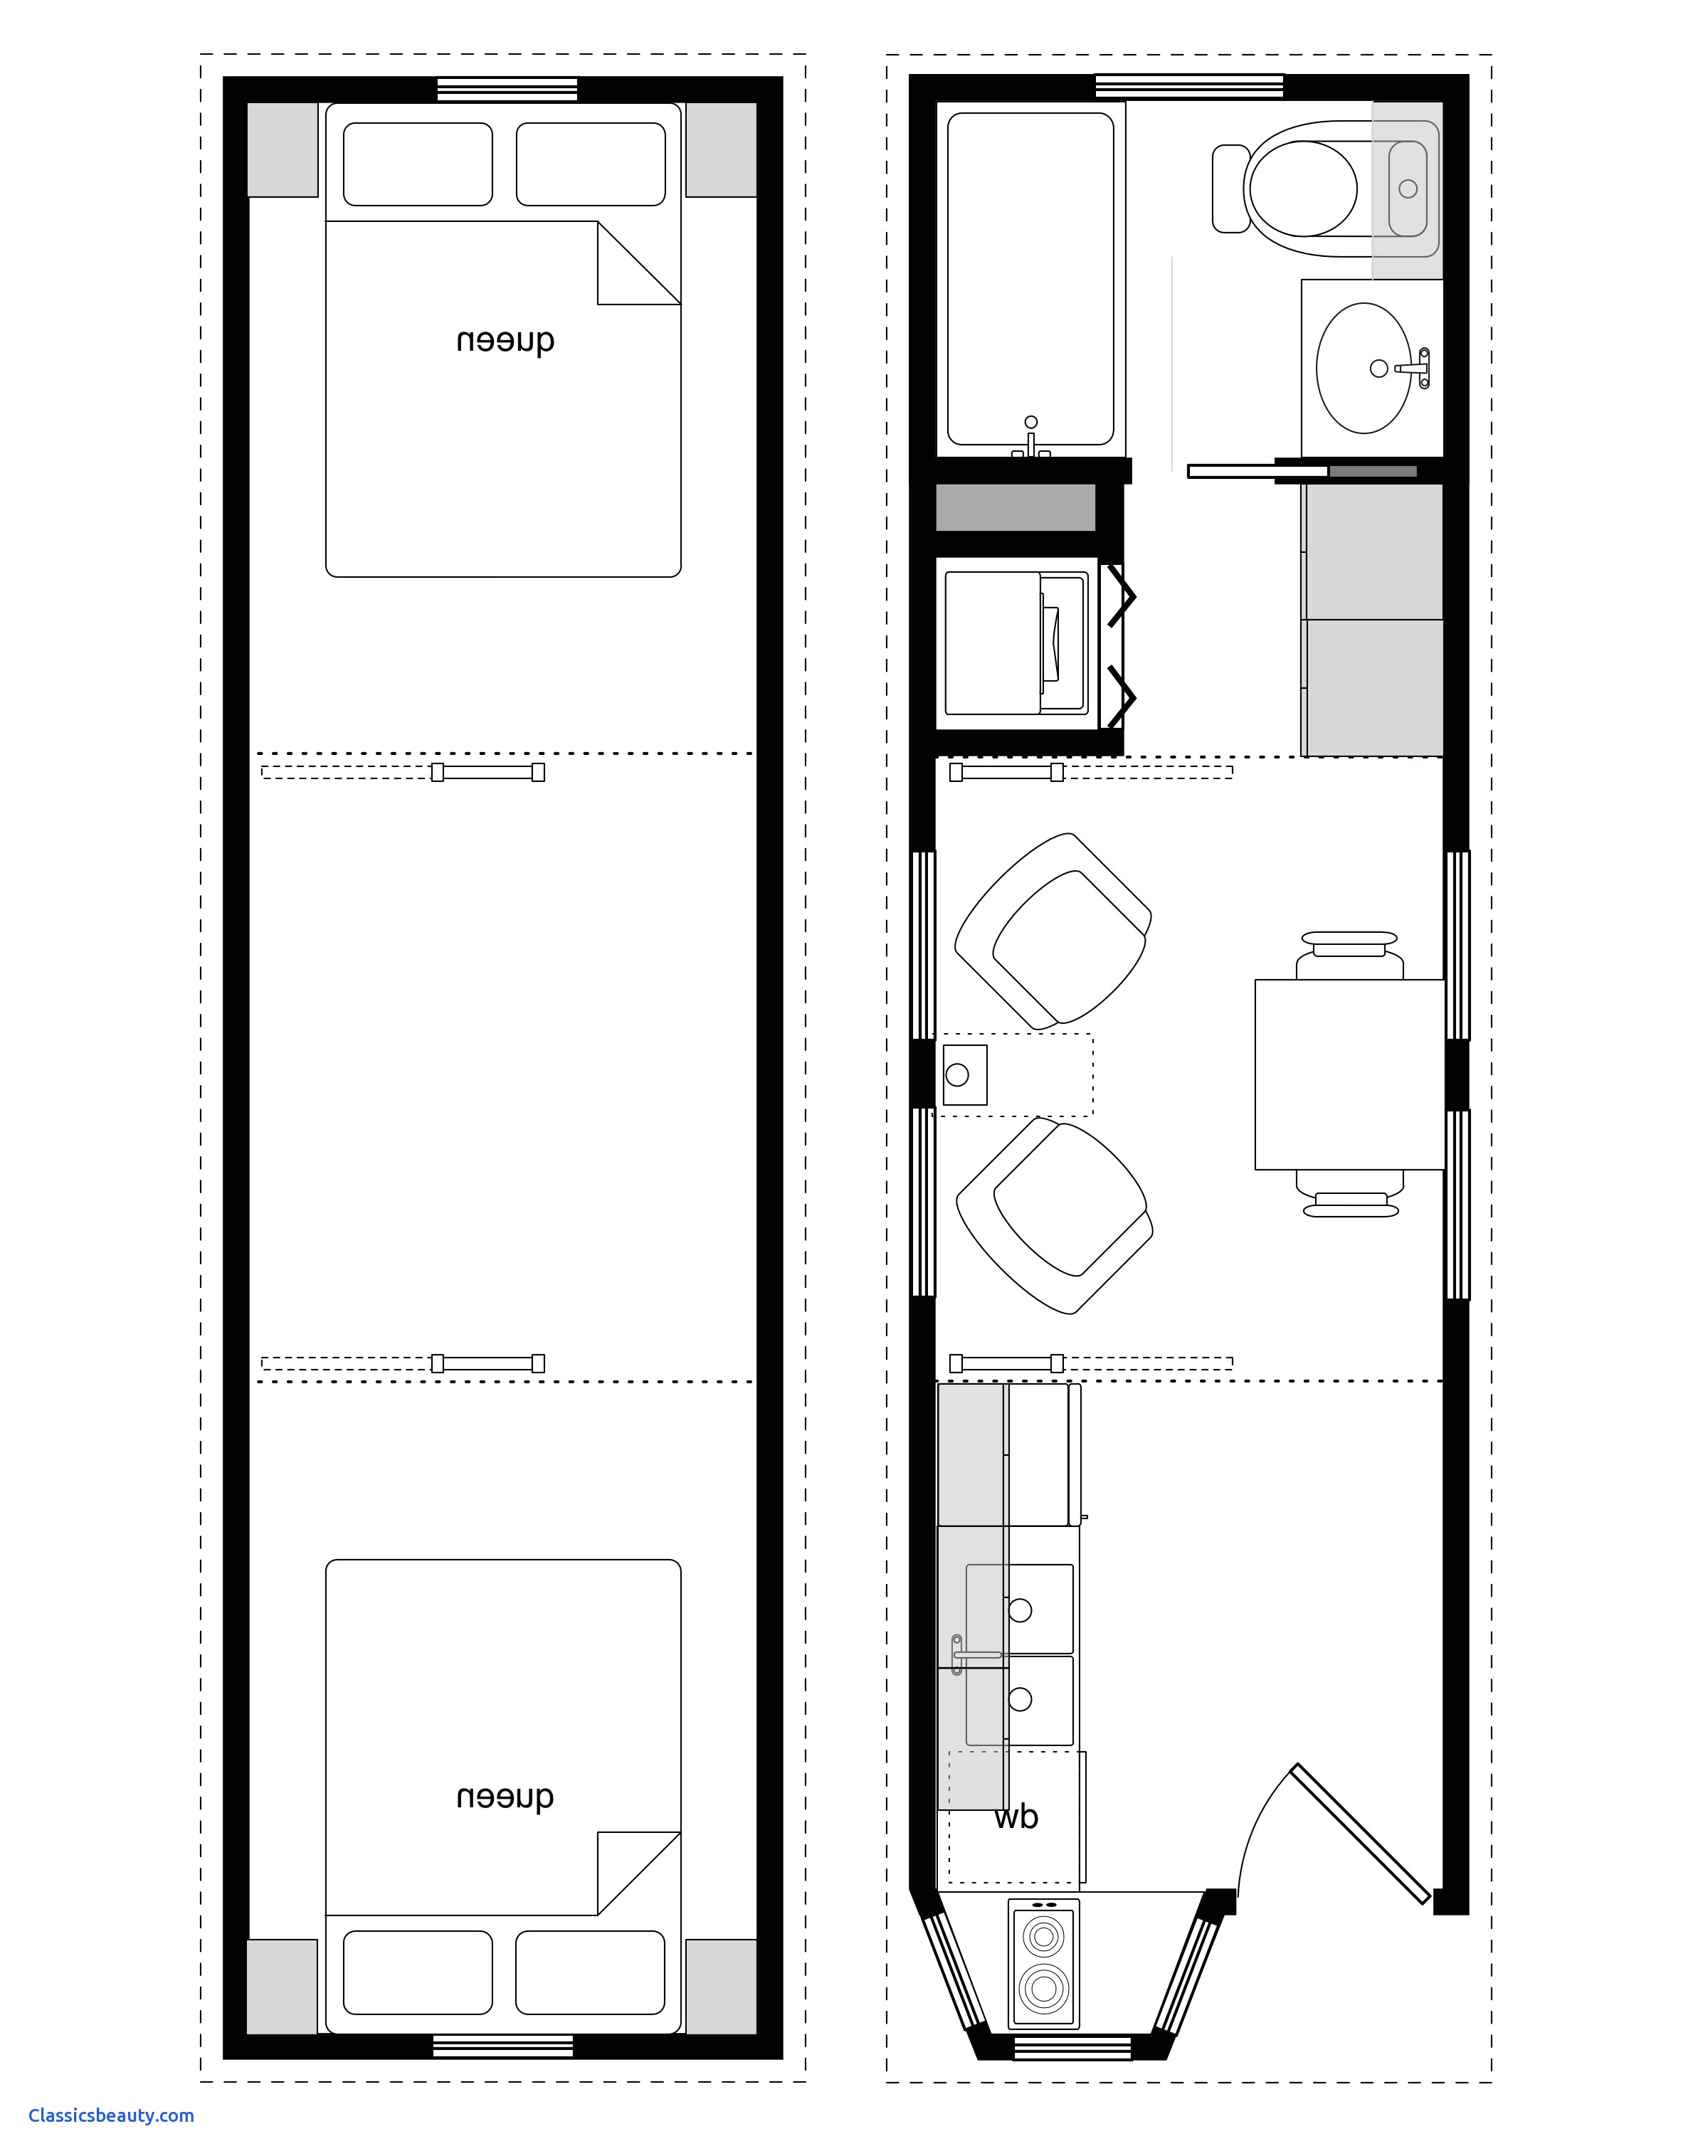 sample floor plan for small house